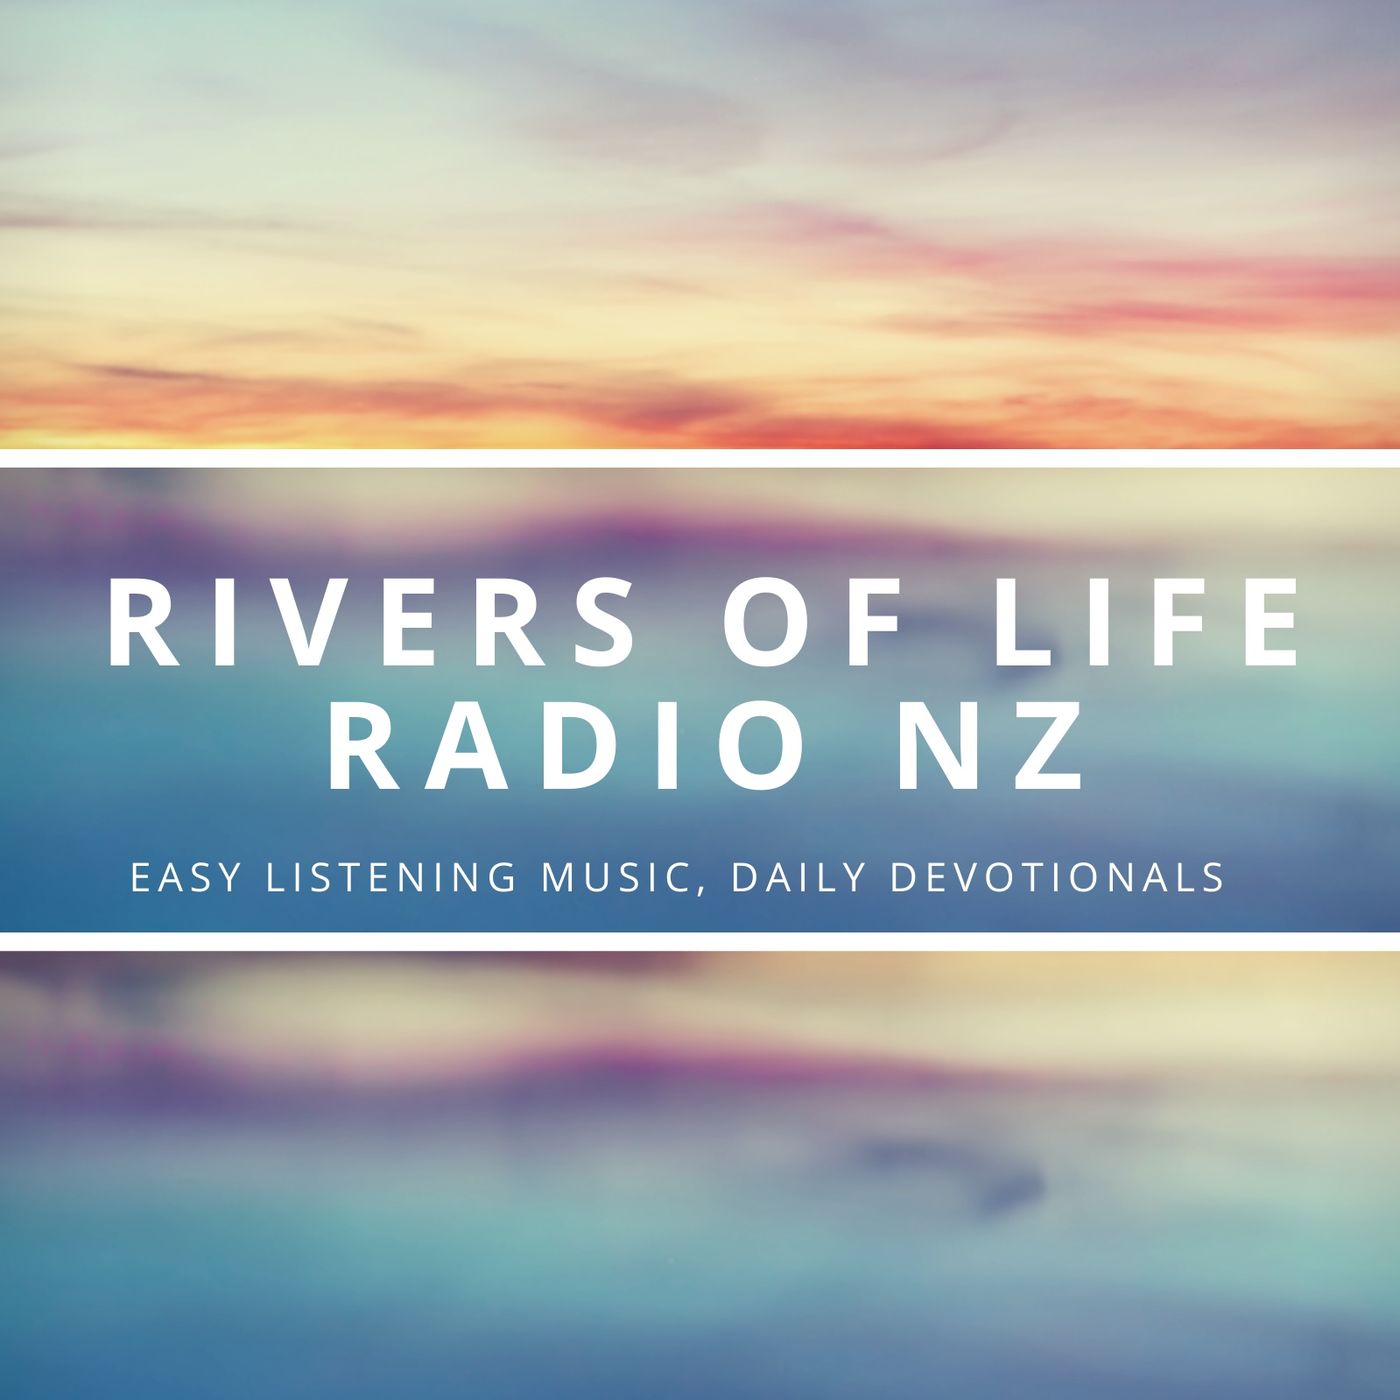 Rivers of Life RADIO